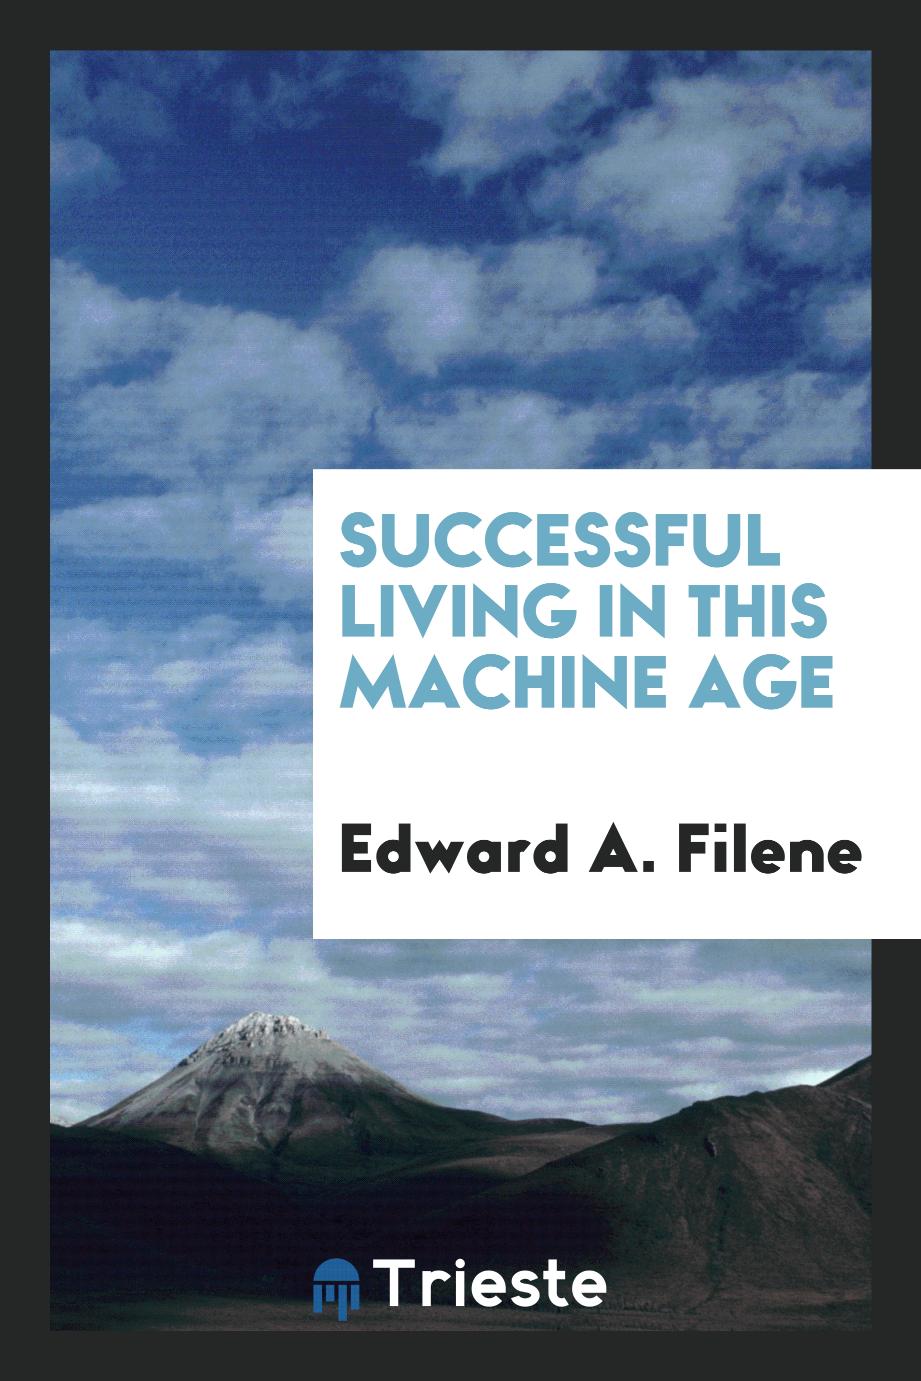 Edward A. Filene - Successful living in this machine age